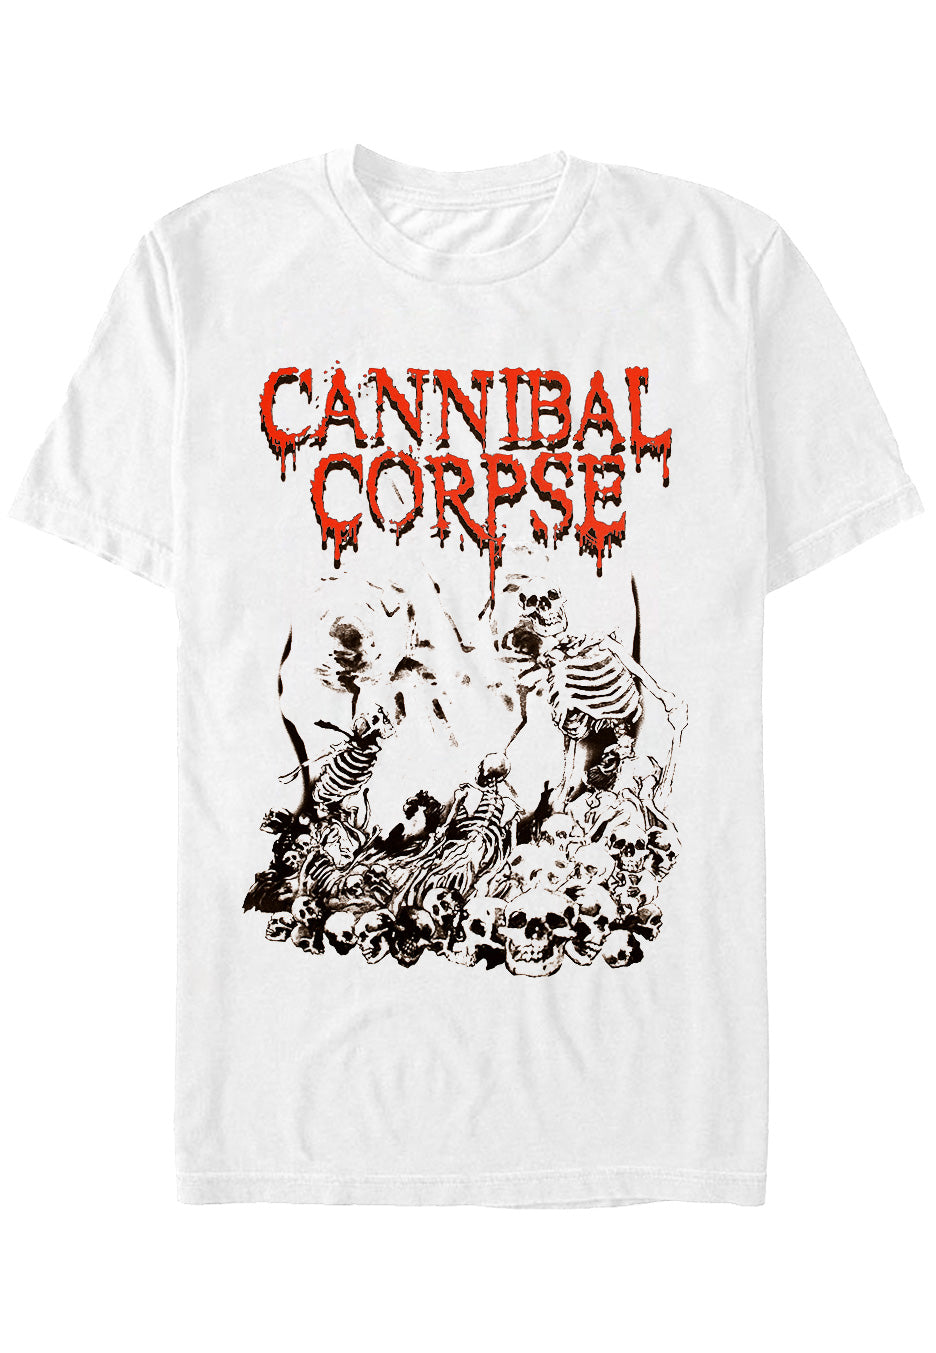 Cannibal Corpse - Pile of Skulls White - T-Shirt